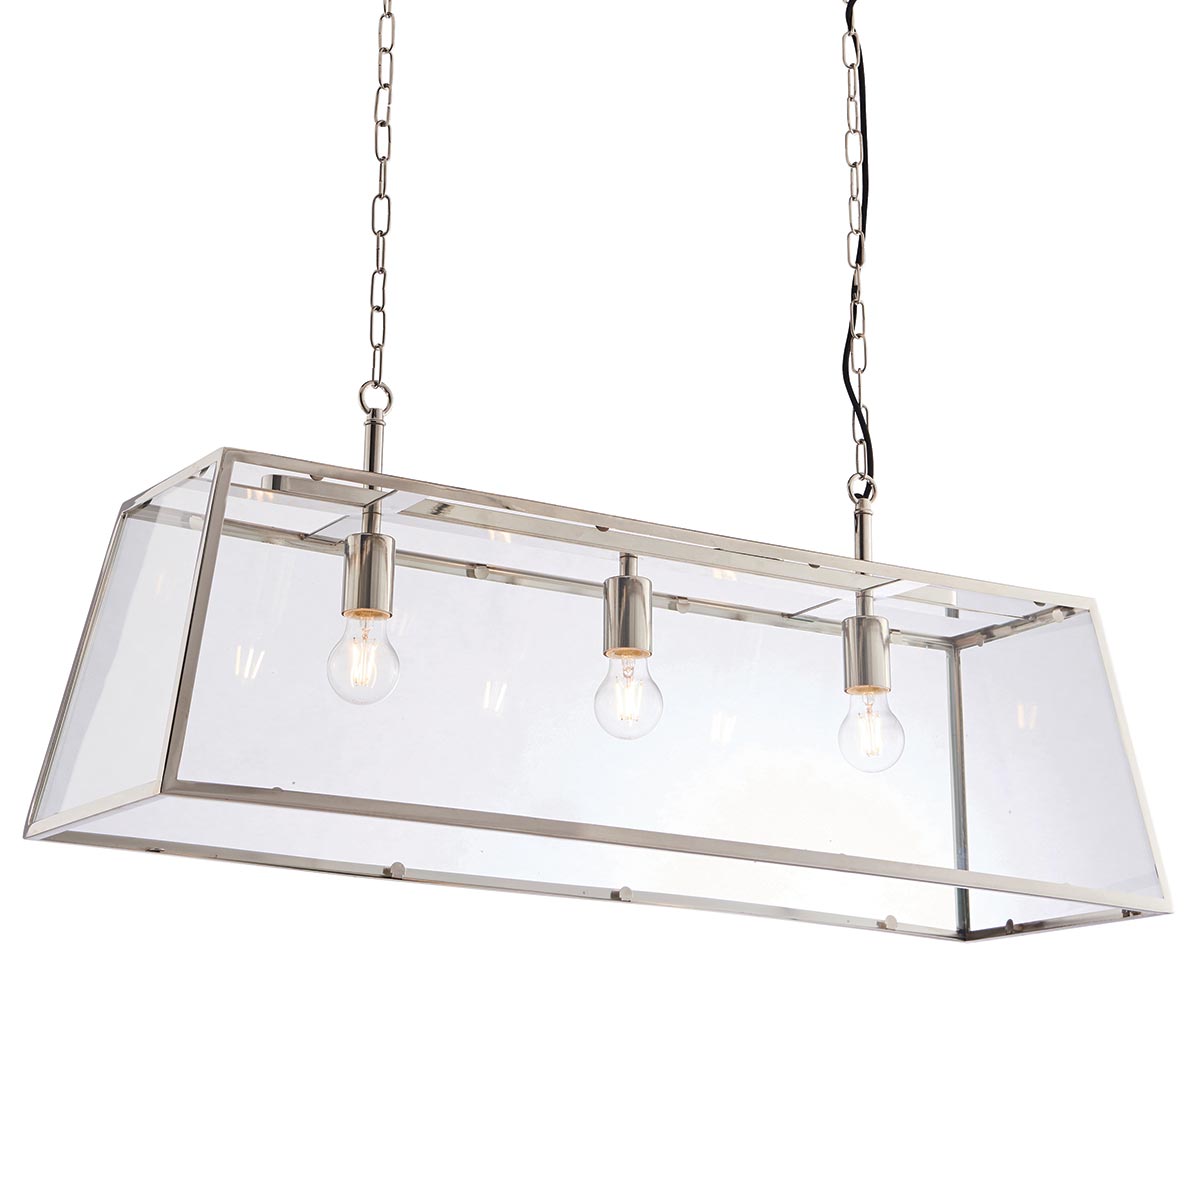 Endon Hurst 3 Light Hanging Trough Lantern Polished Nickel Clear Glass